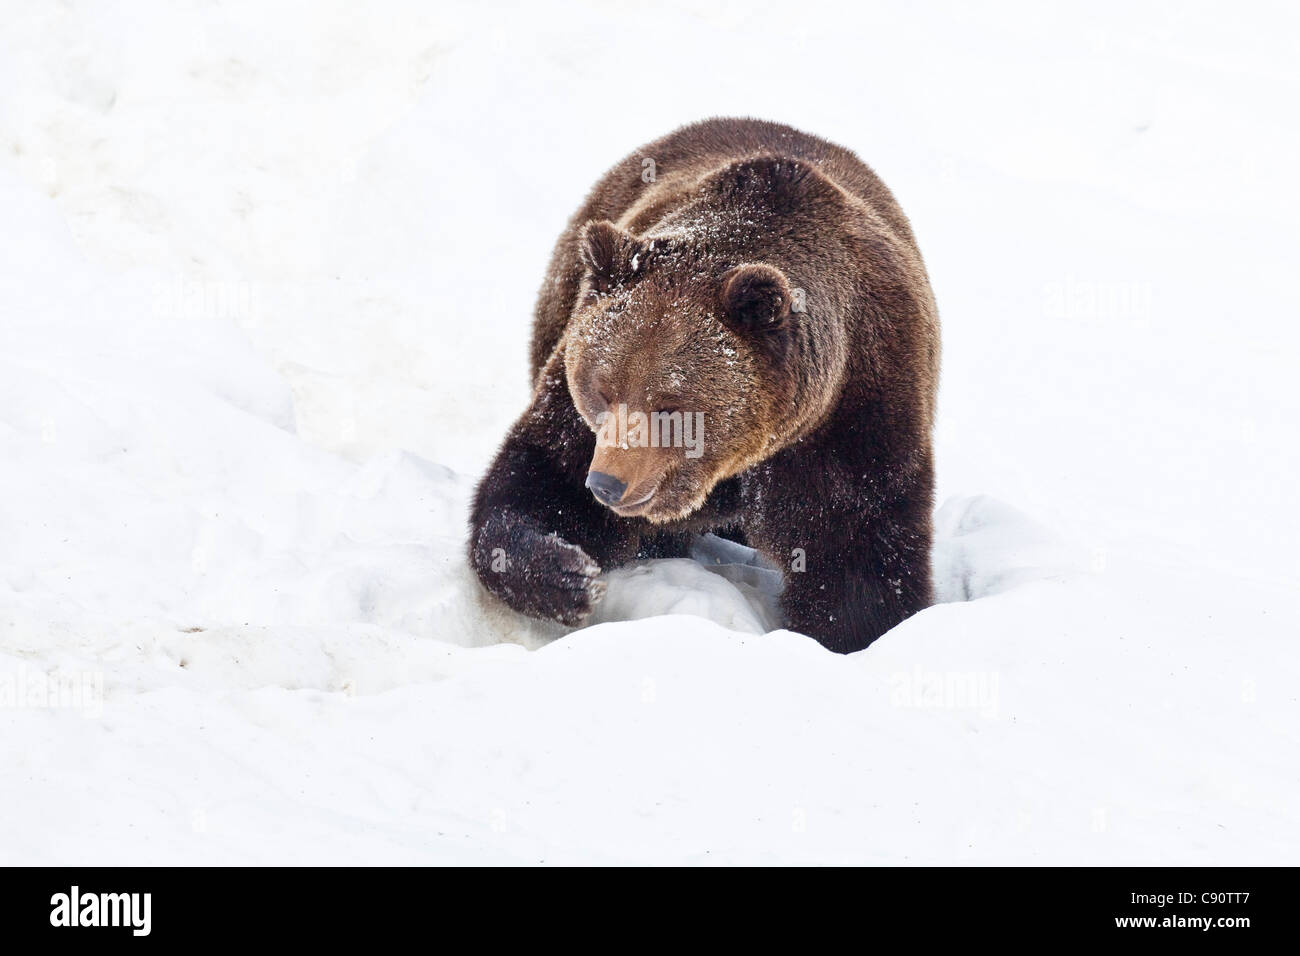 European brown bear in the snow, Nationalpark Bayrischer Wald, Bavaria, Germany, Europe Stock Photo